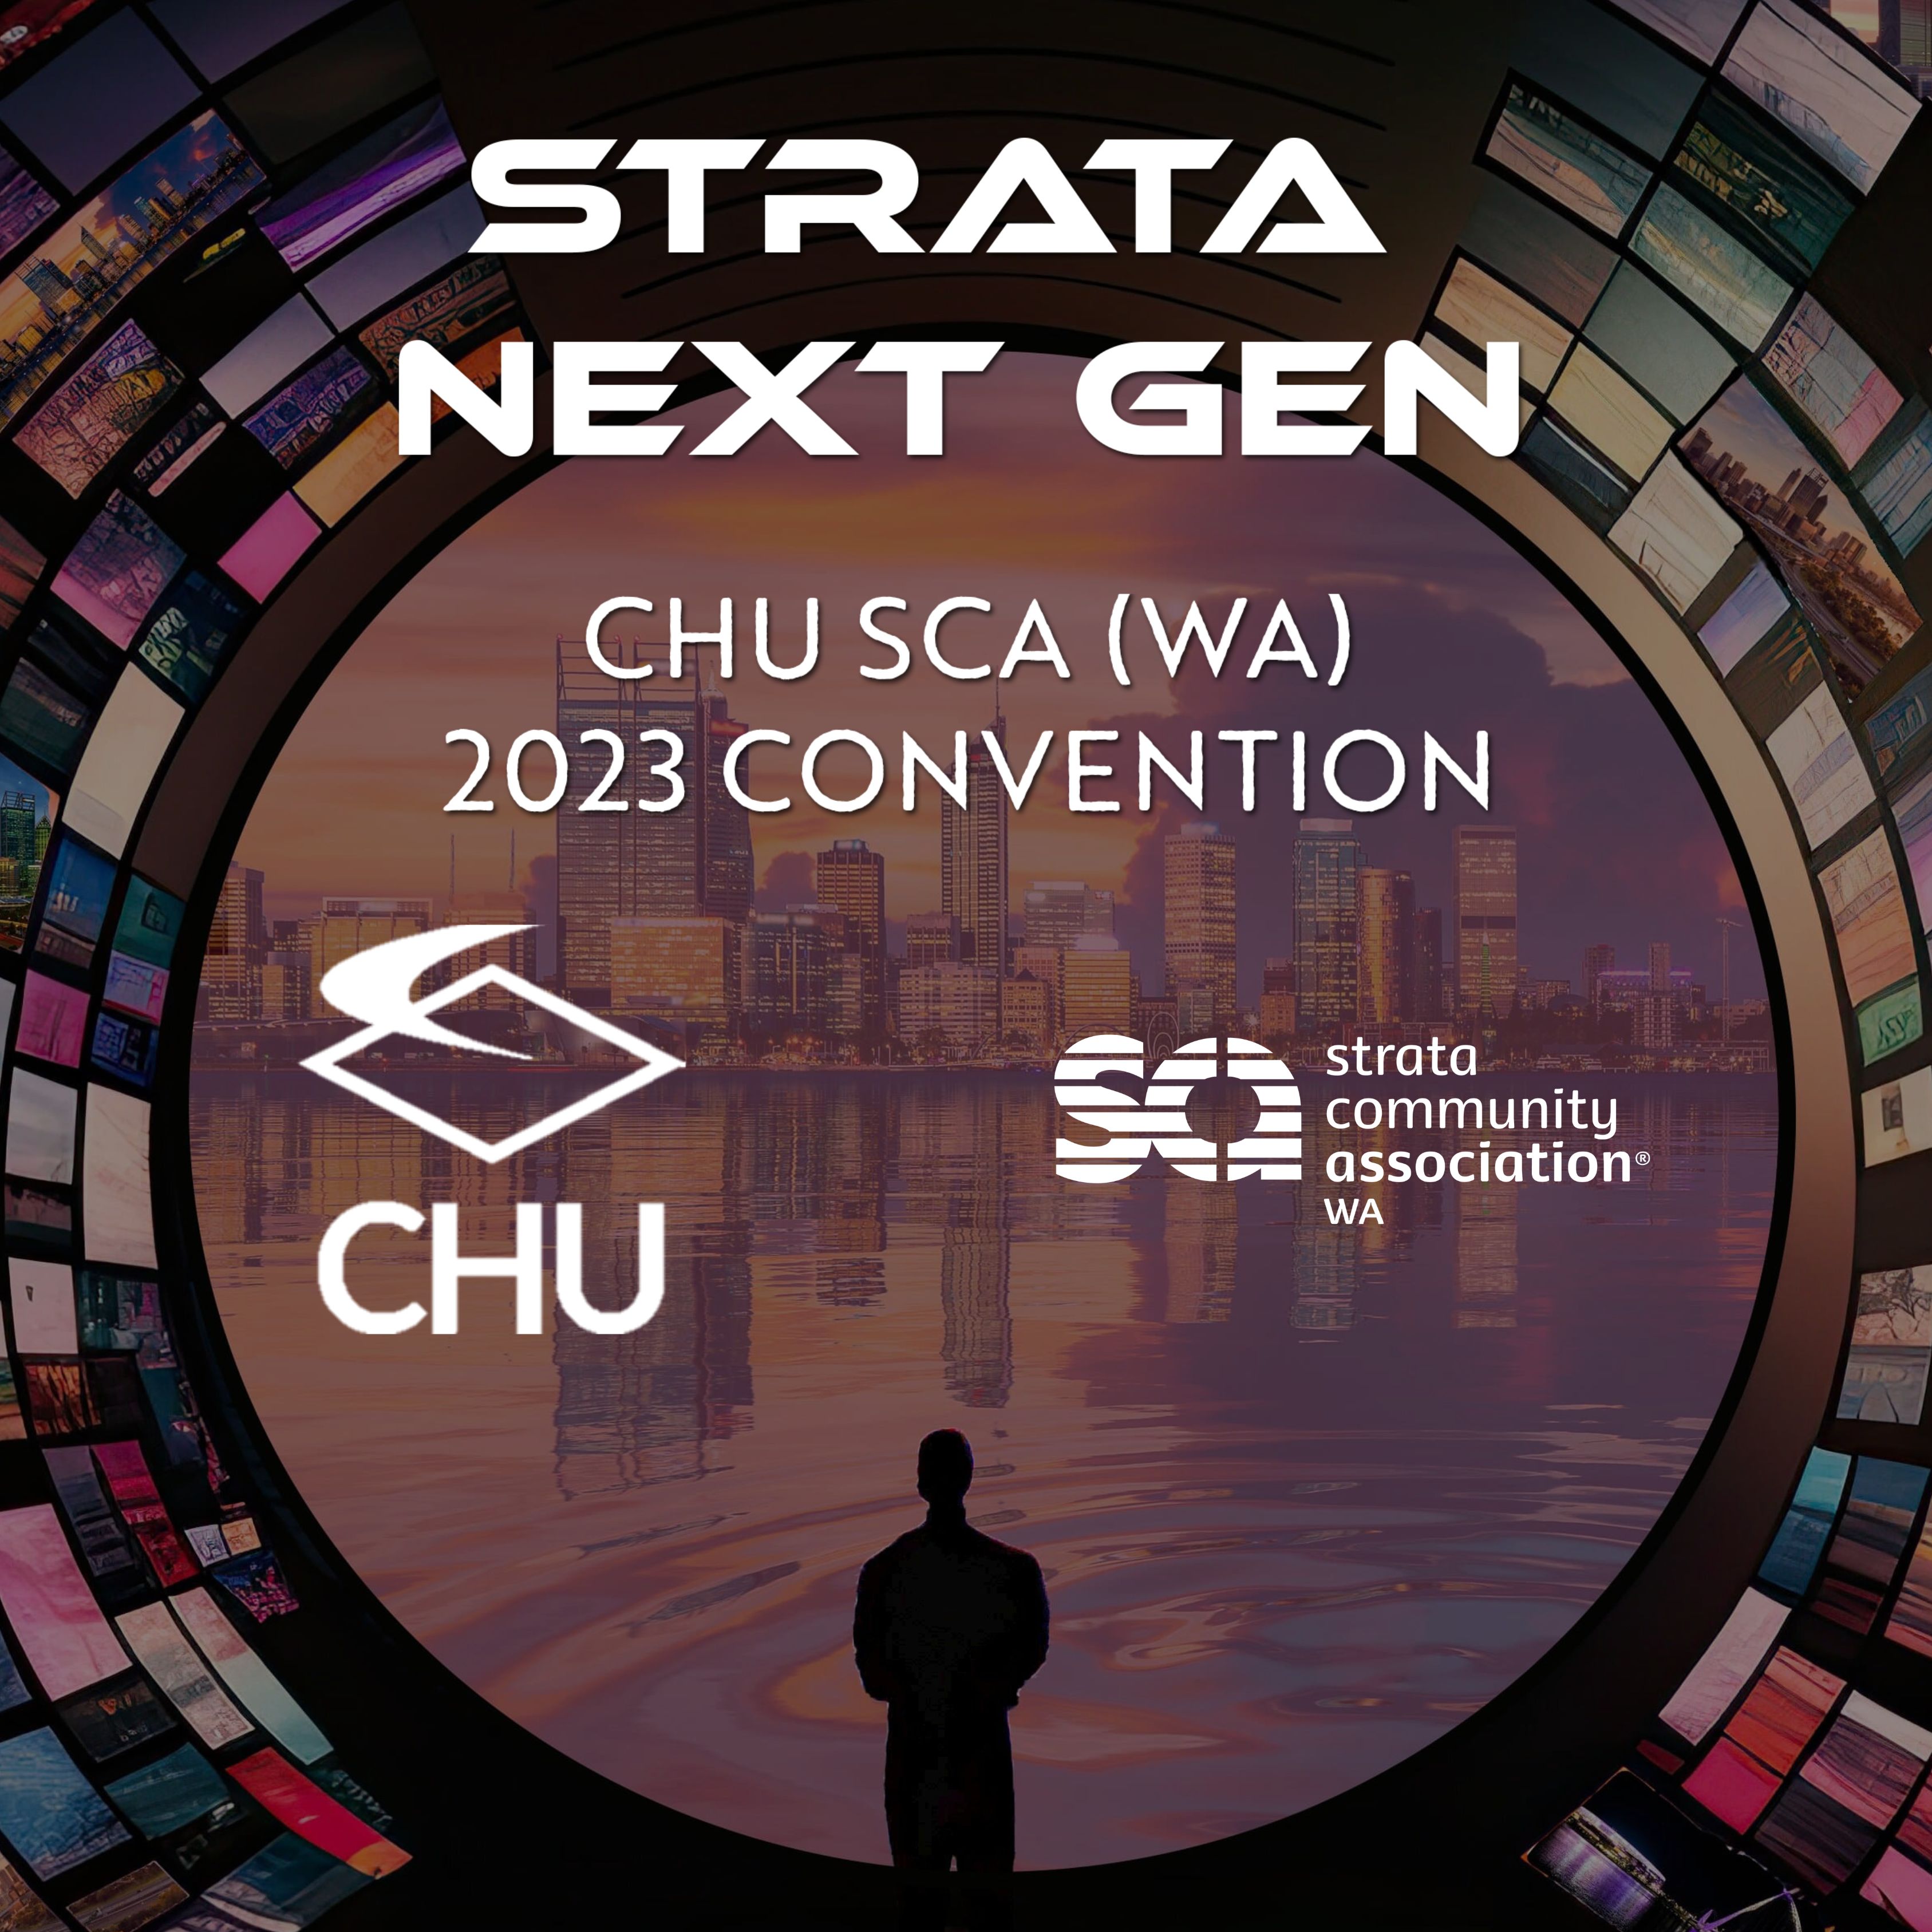 WA - CHU SCA (WA) 2023 Convention